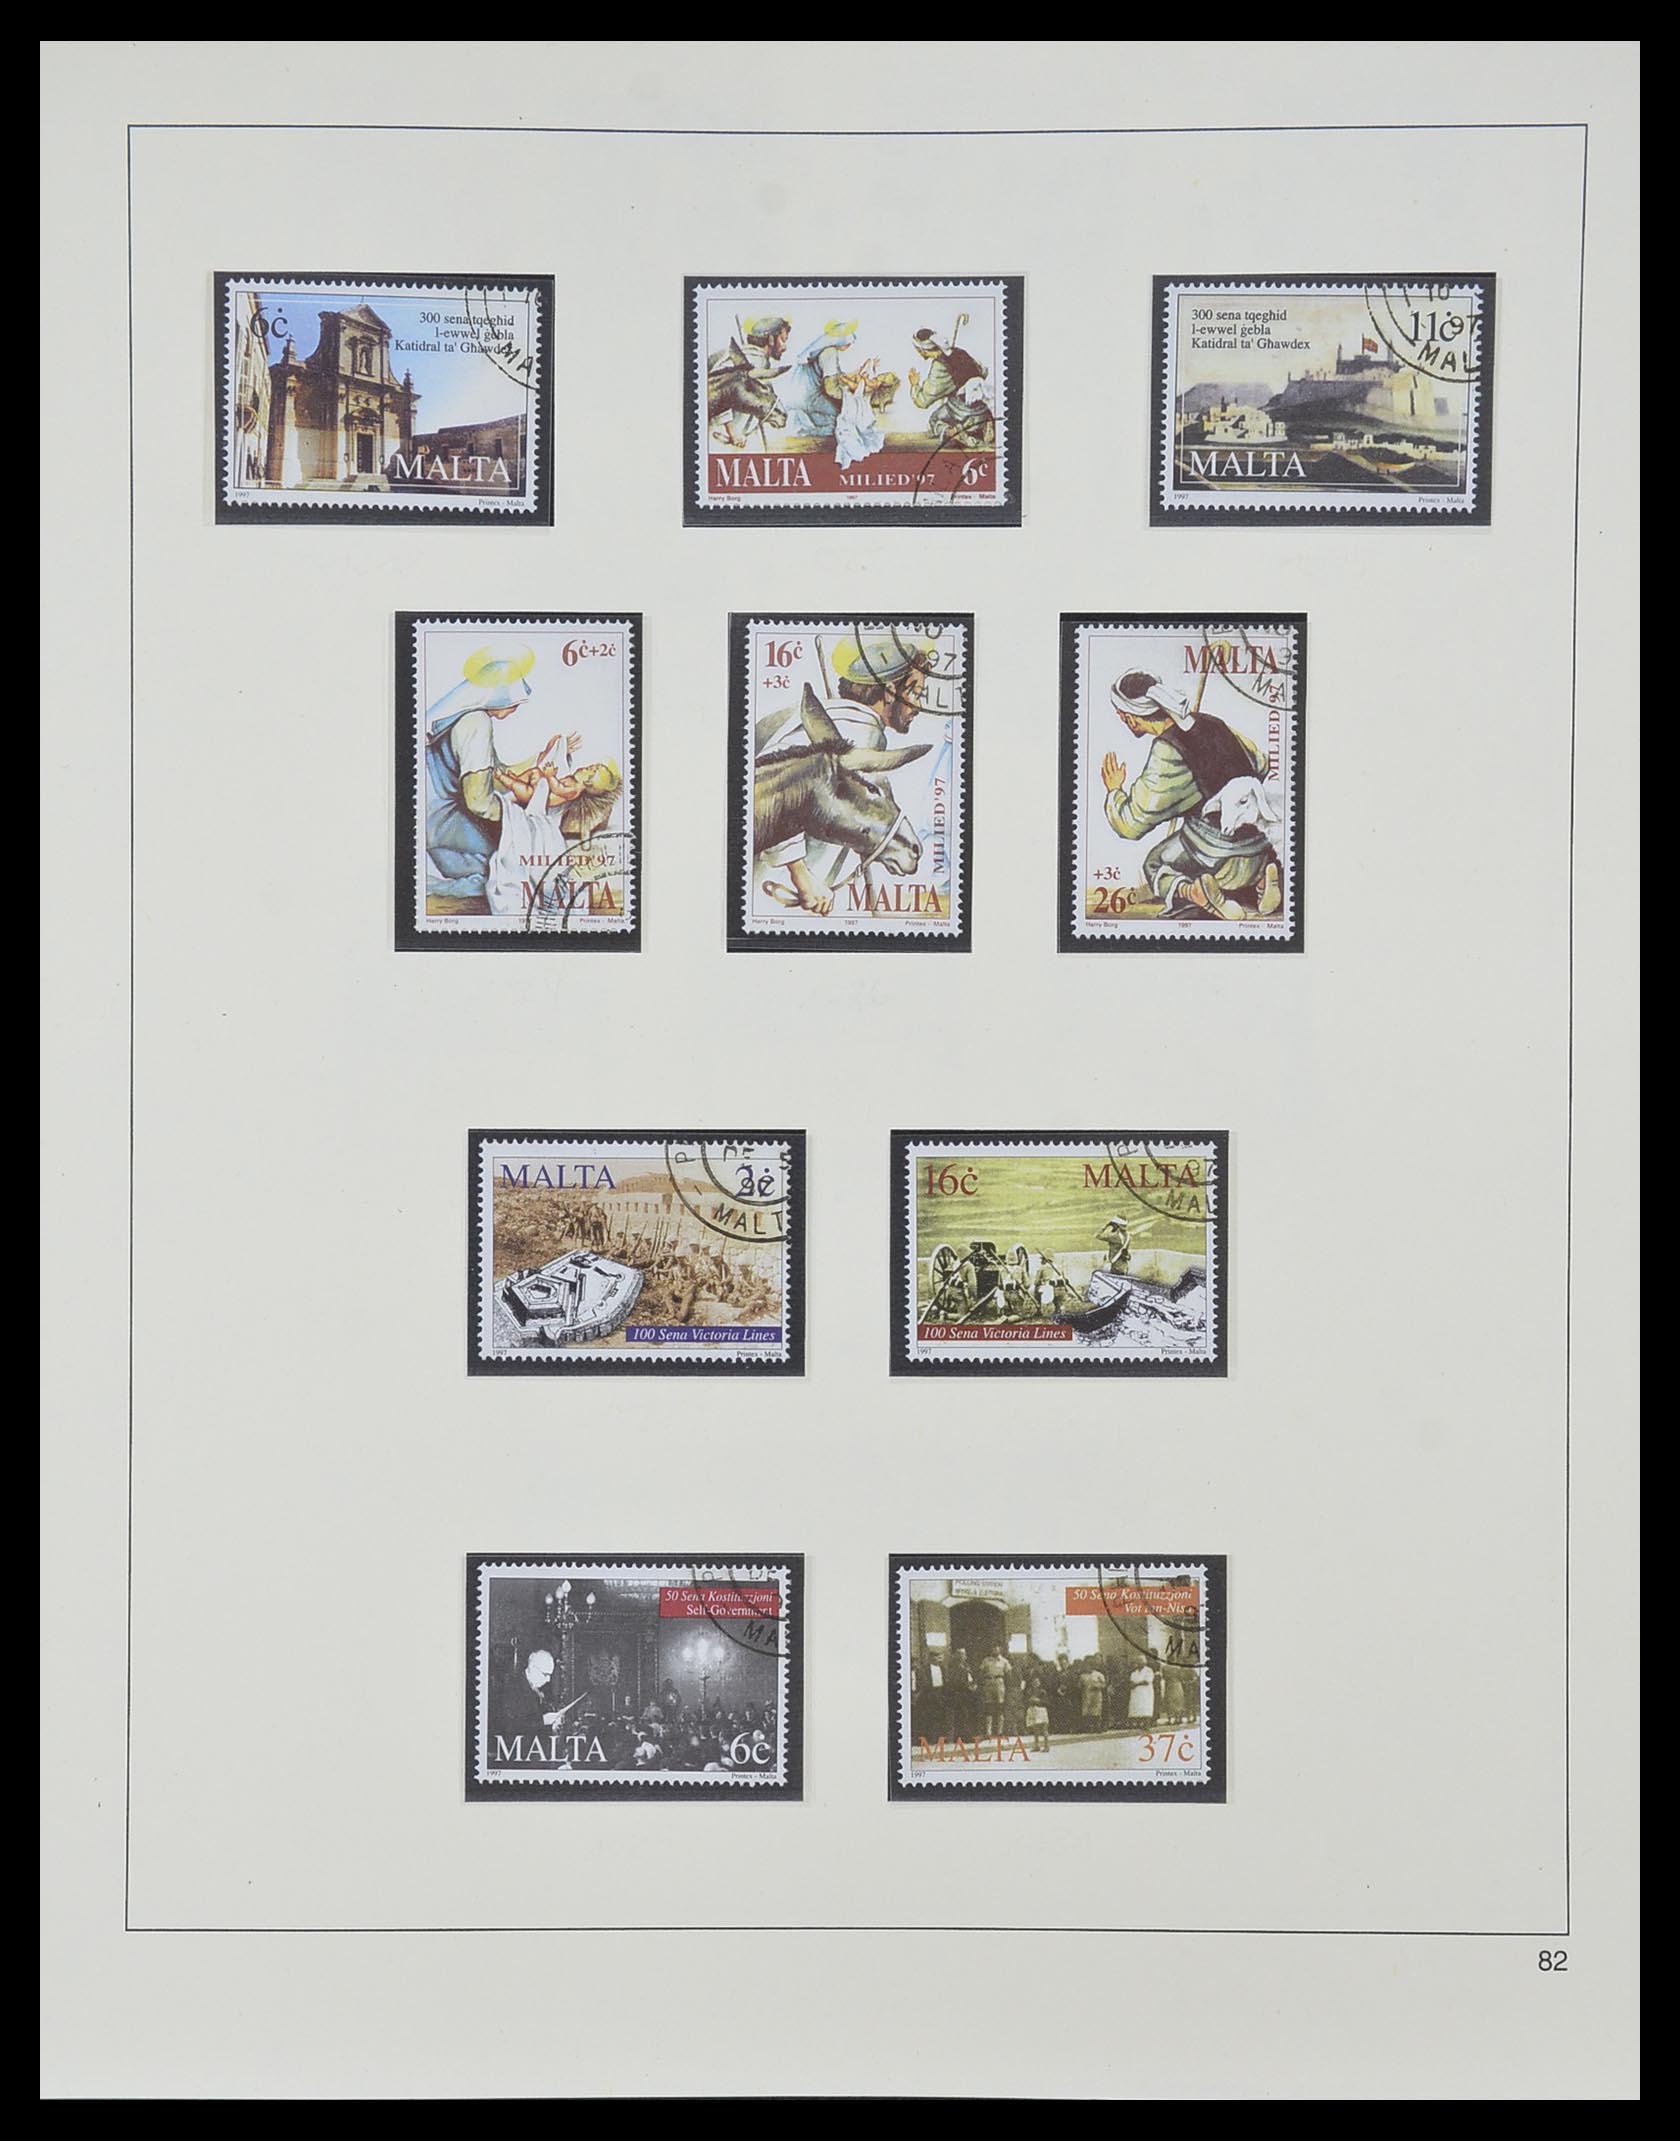 33968 182 - Stamp collection 33968 Malta 1861-2001.